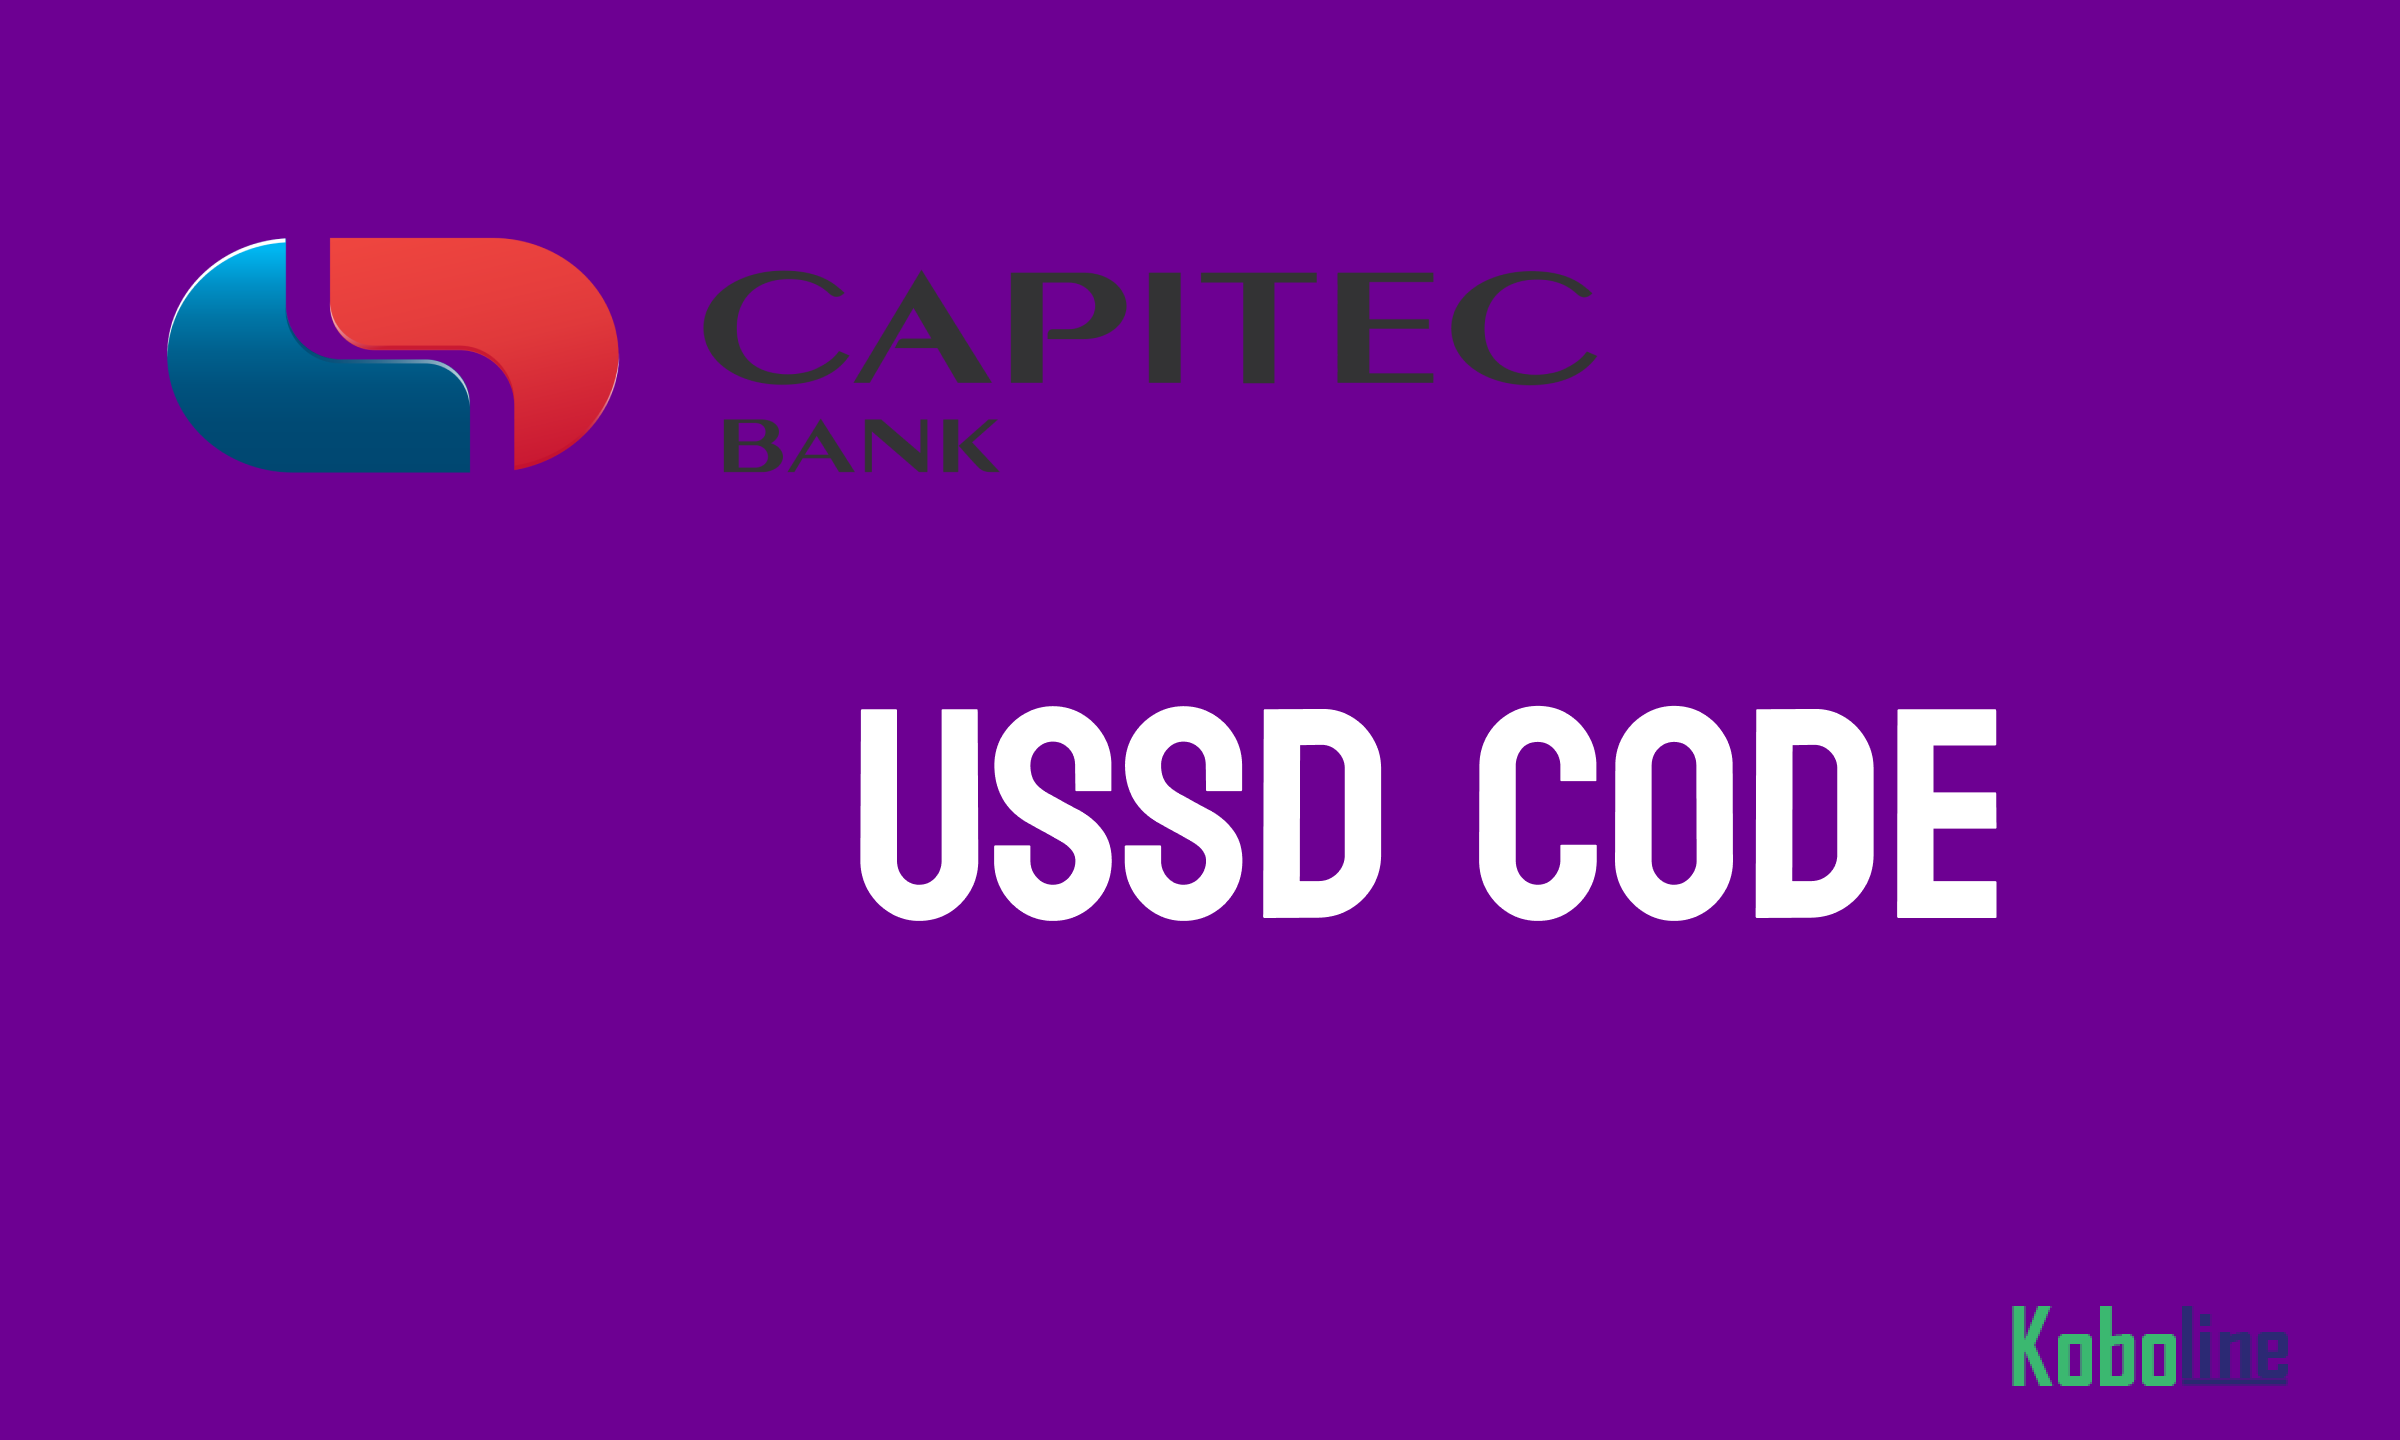 Capitec USSD Code (to Send & Transfer Money)